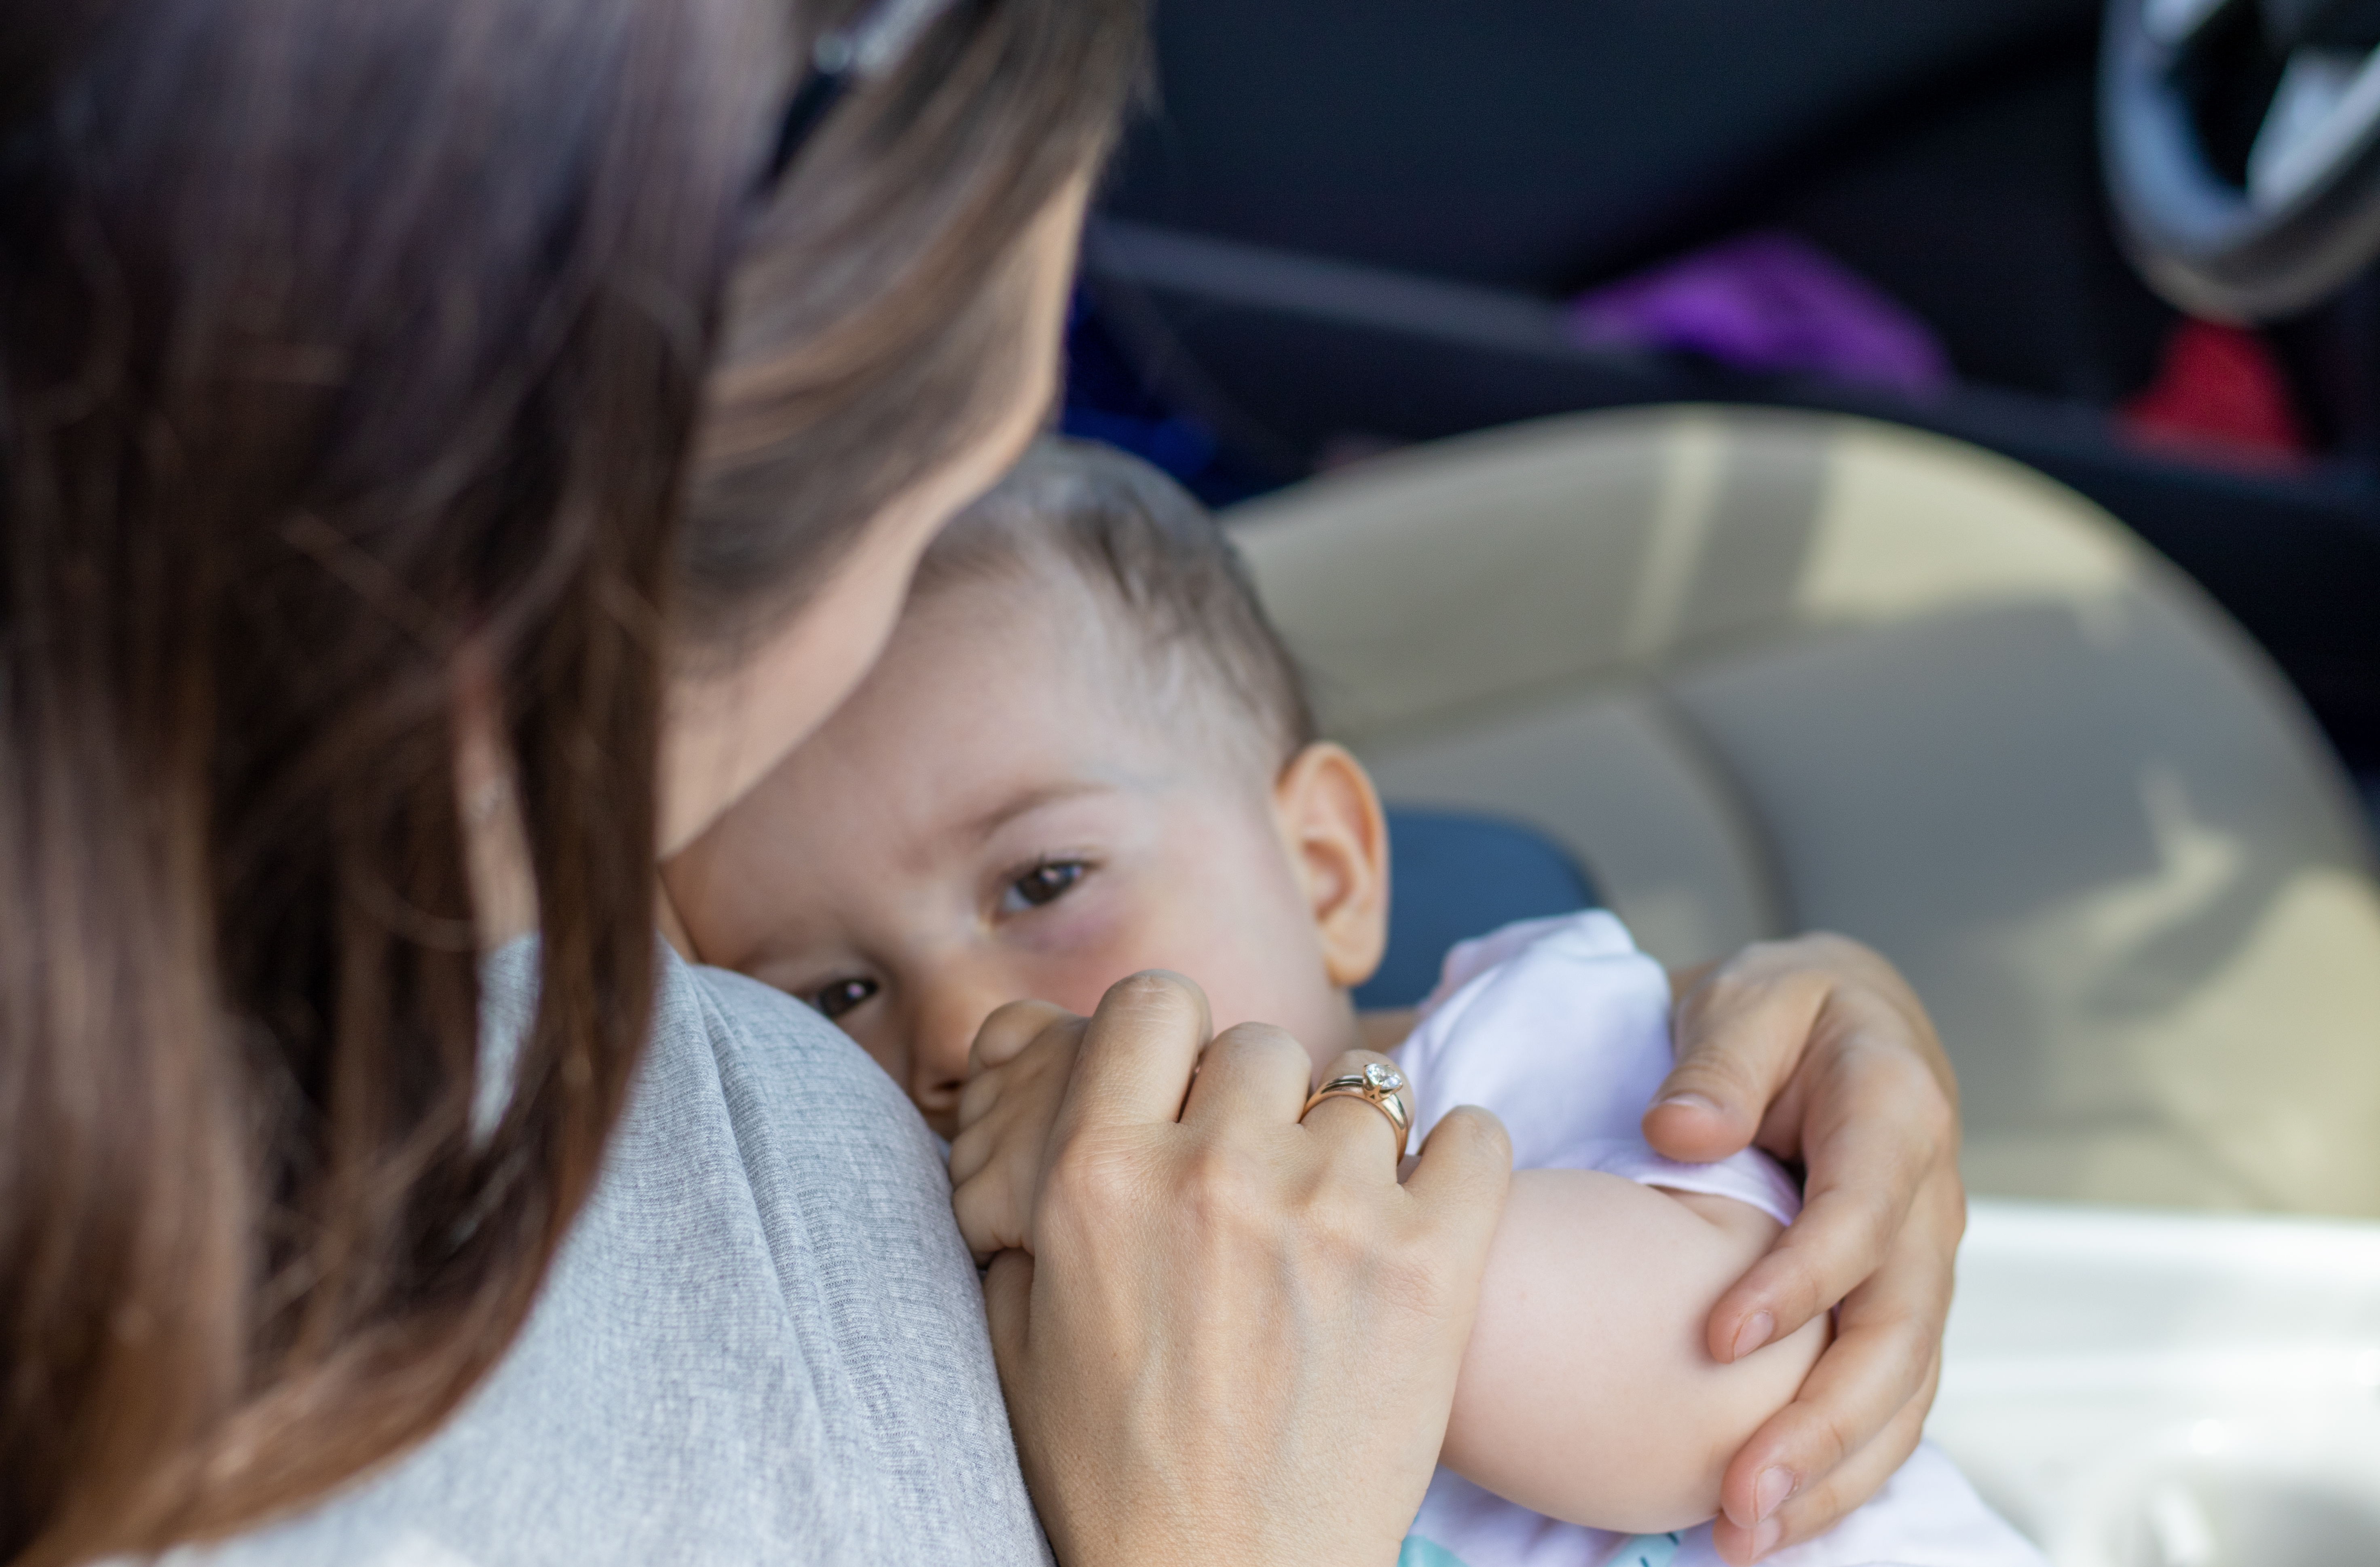 Baby boy on car | Source: Shutterstock